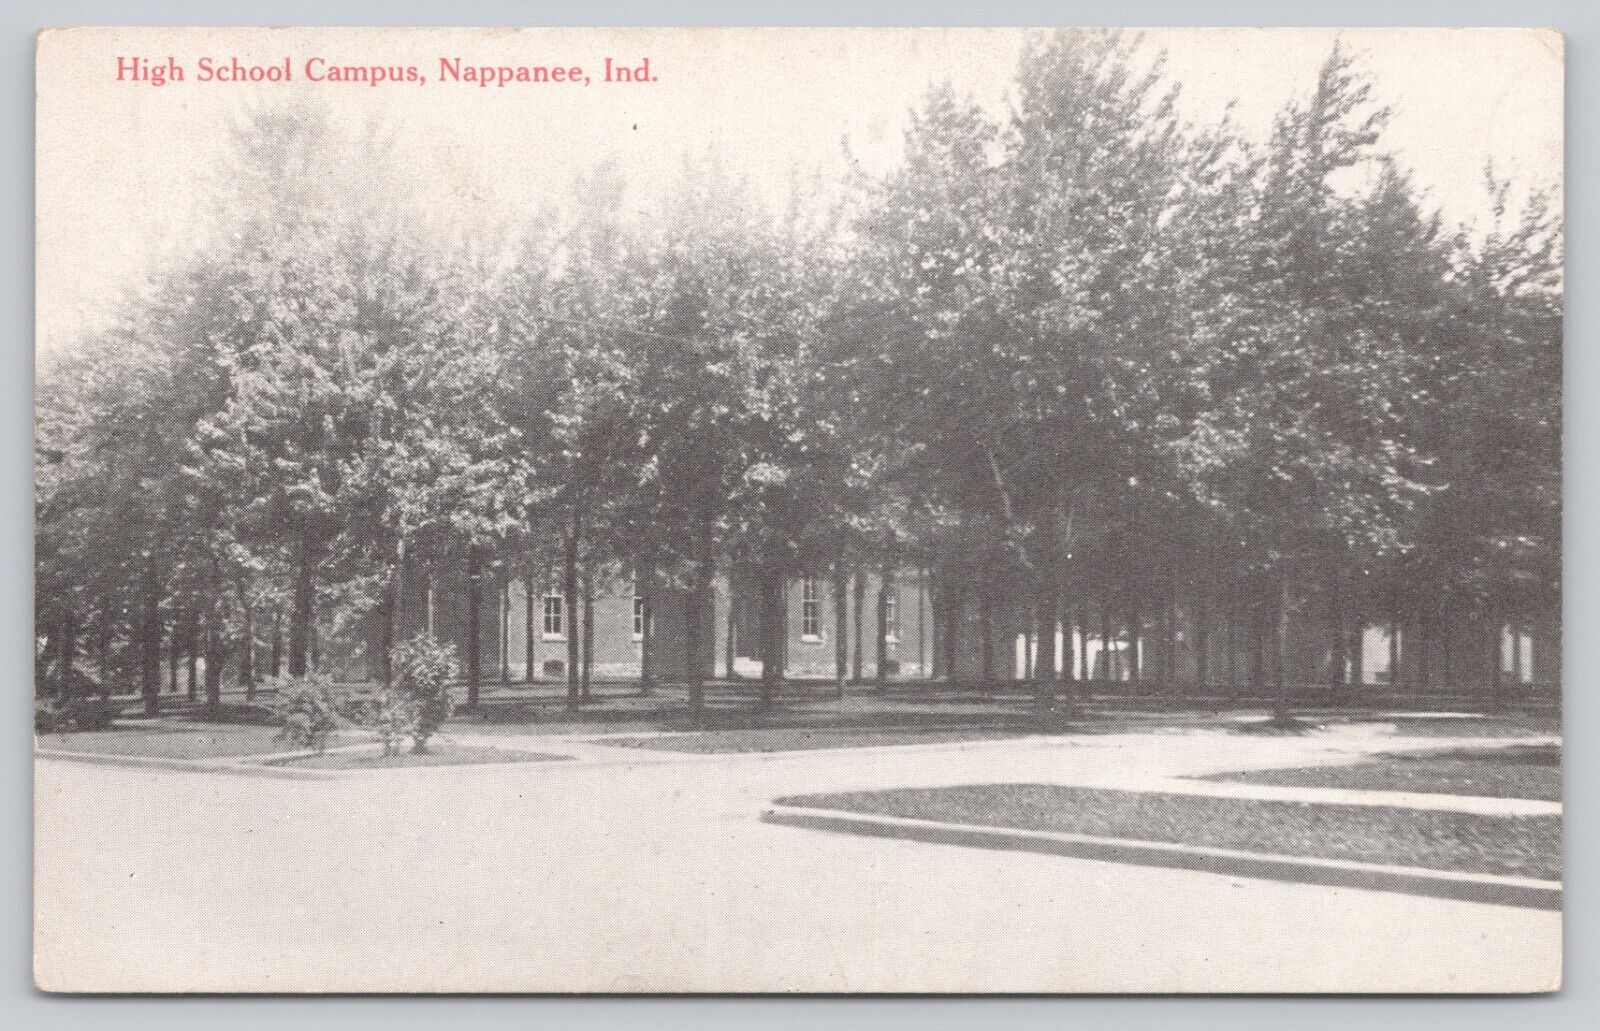 Vintage Postcard High School Campus in Nappanee, Indiana - Campus, Trees